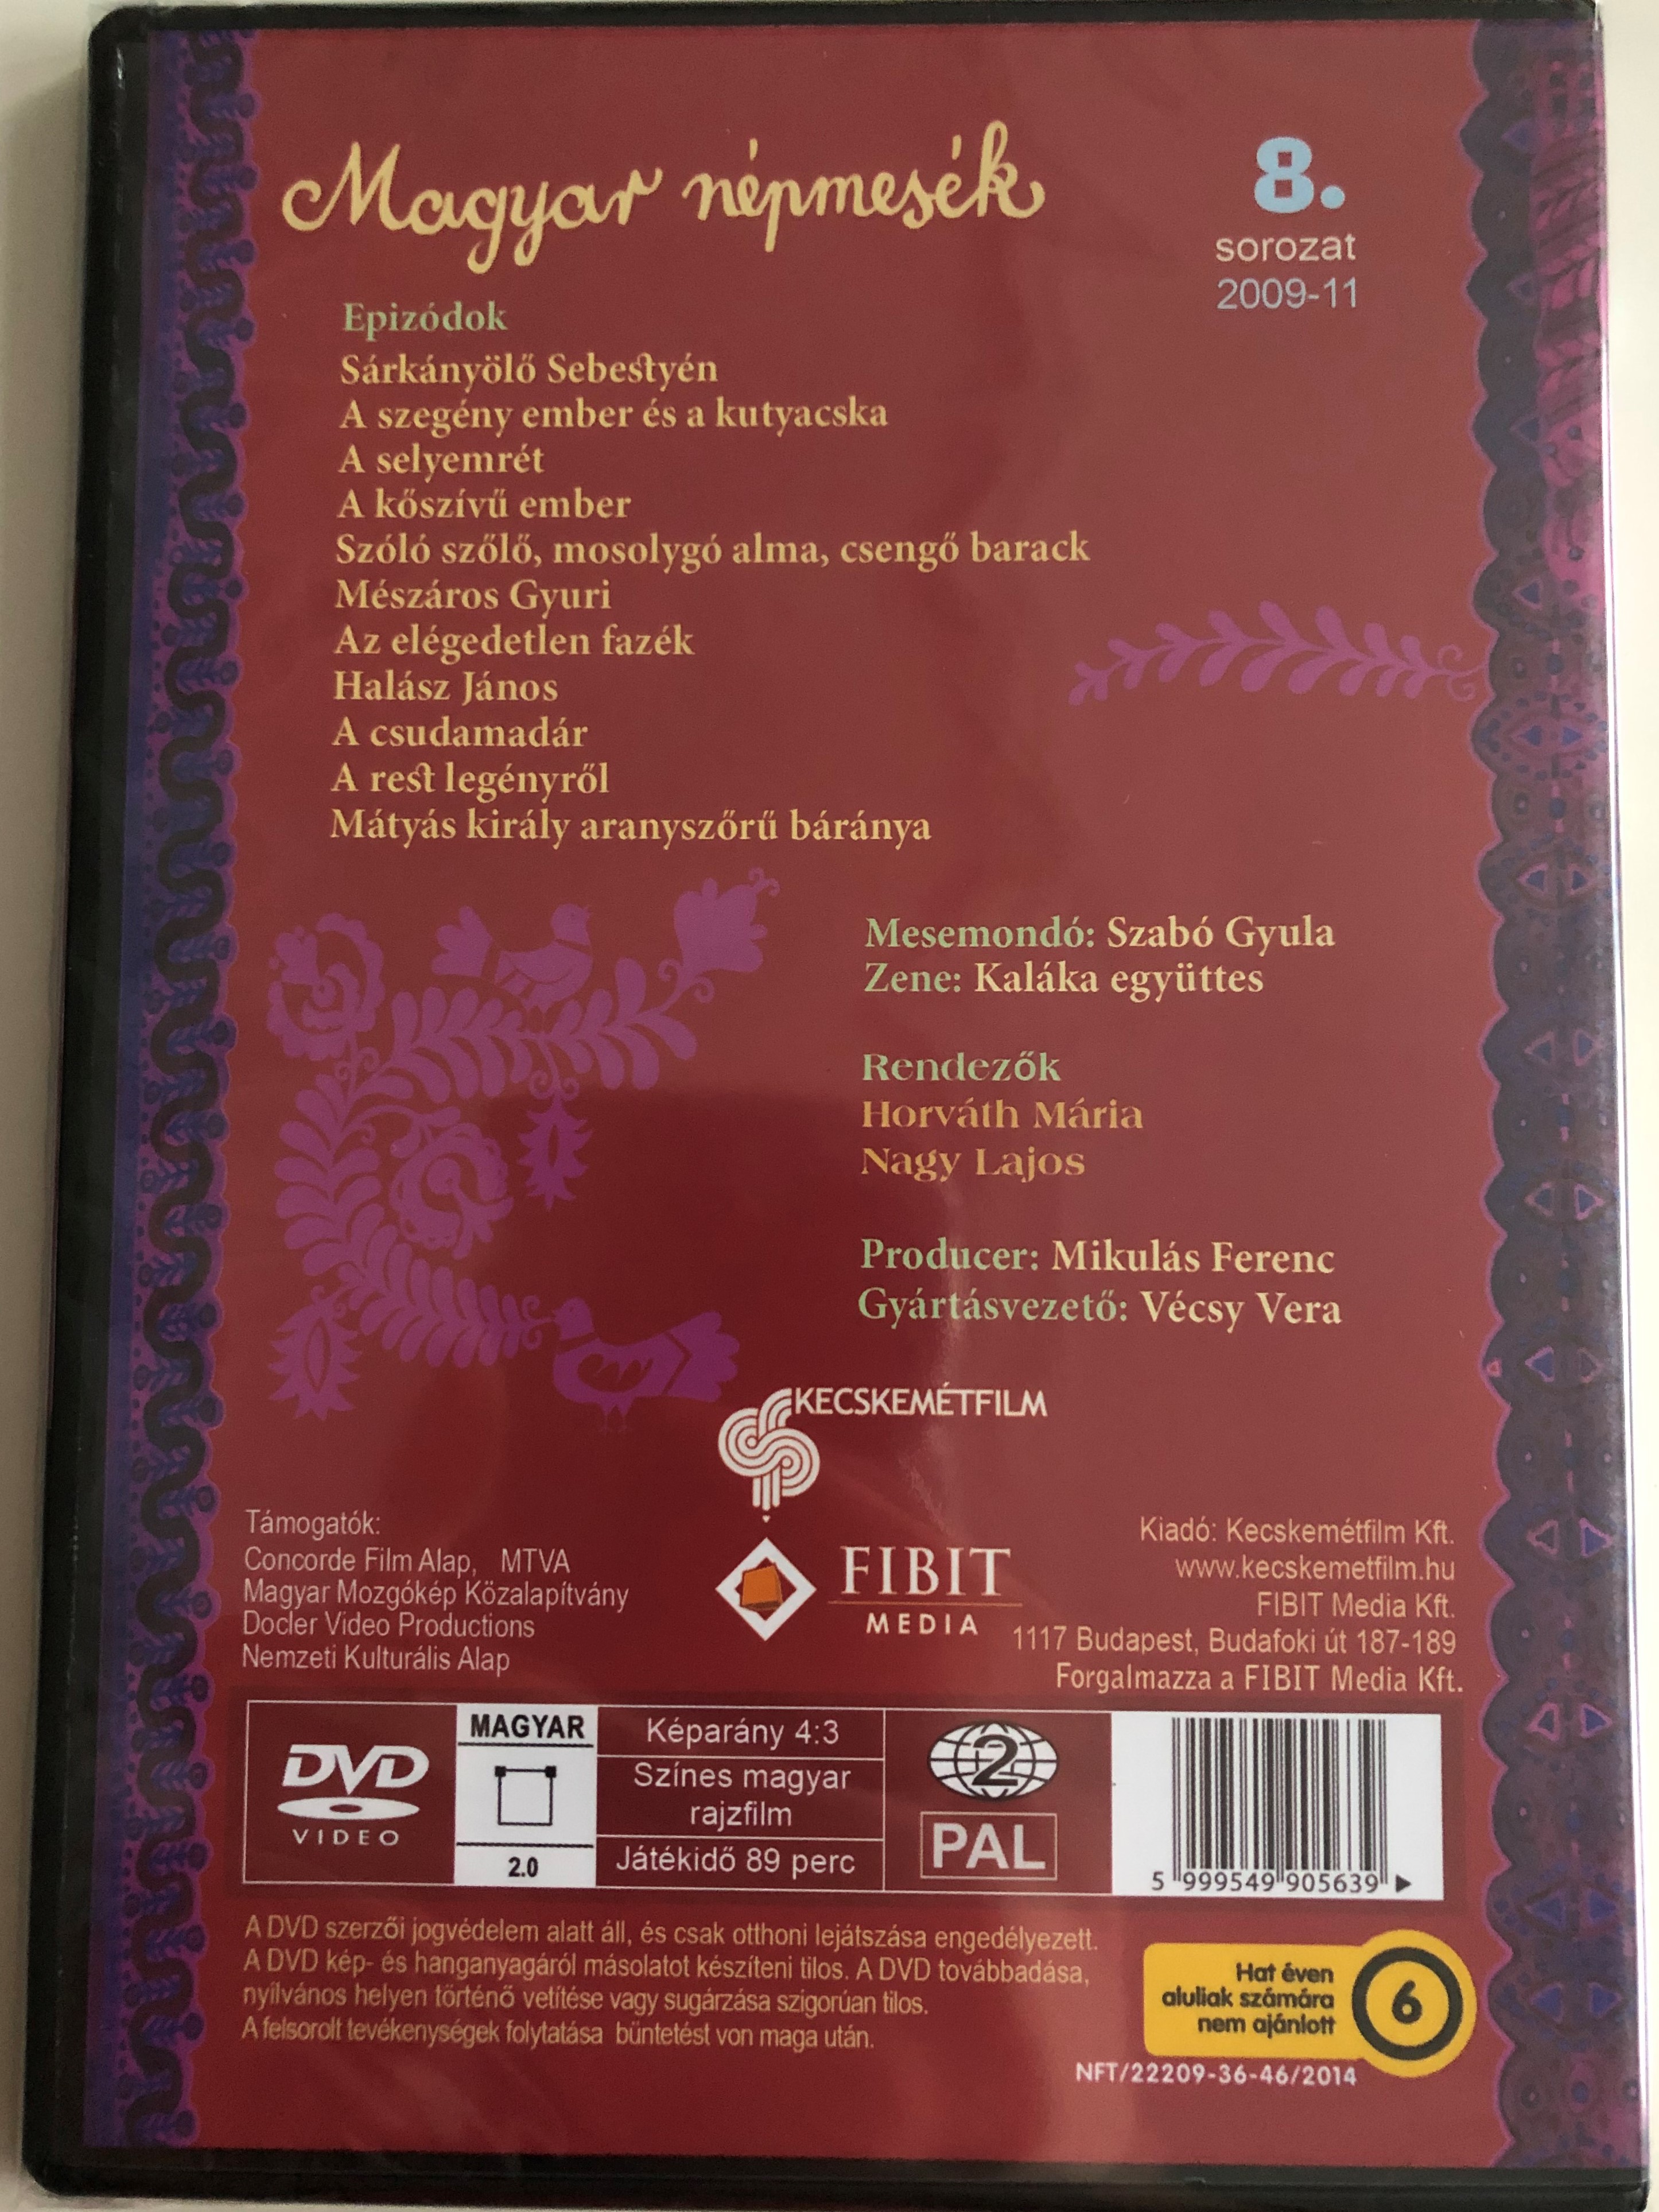 -magyar-n-pmes-k-8.-s-rk-ny-l-sebesty-n-dvd-2009-2011-hungarian-folk-tales-for-children-2-.jpg